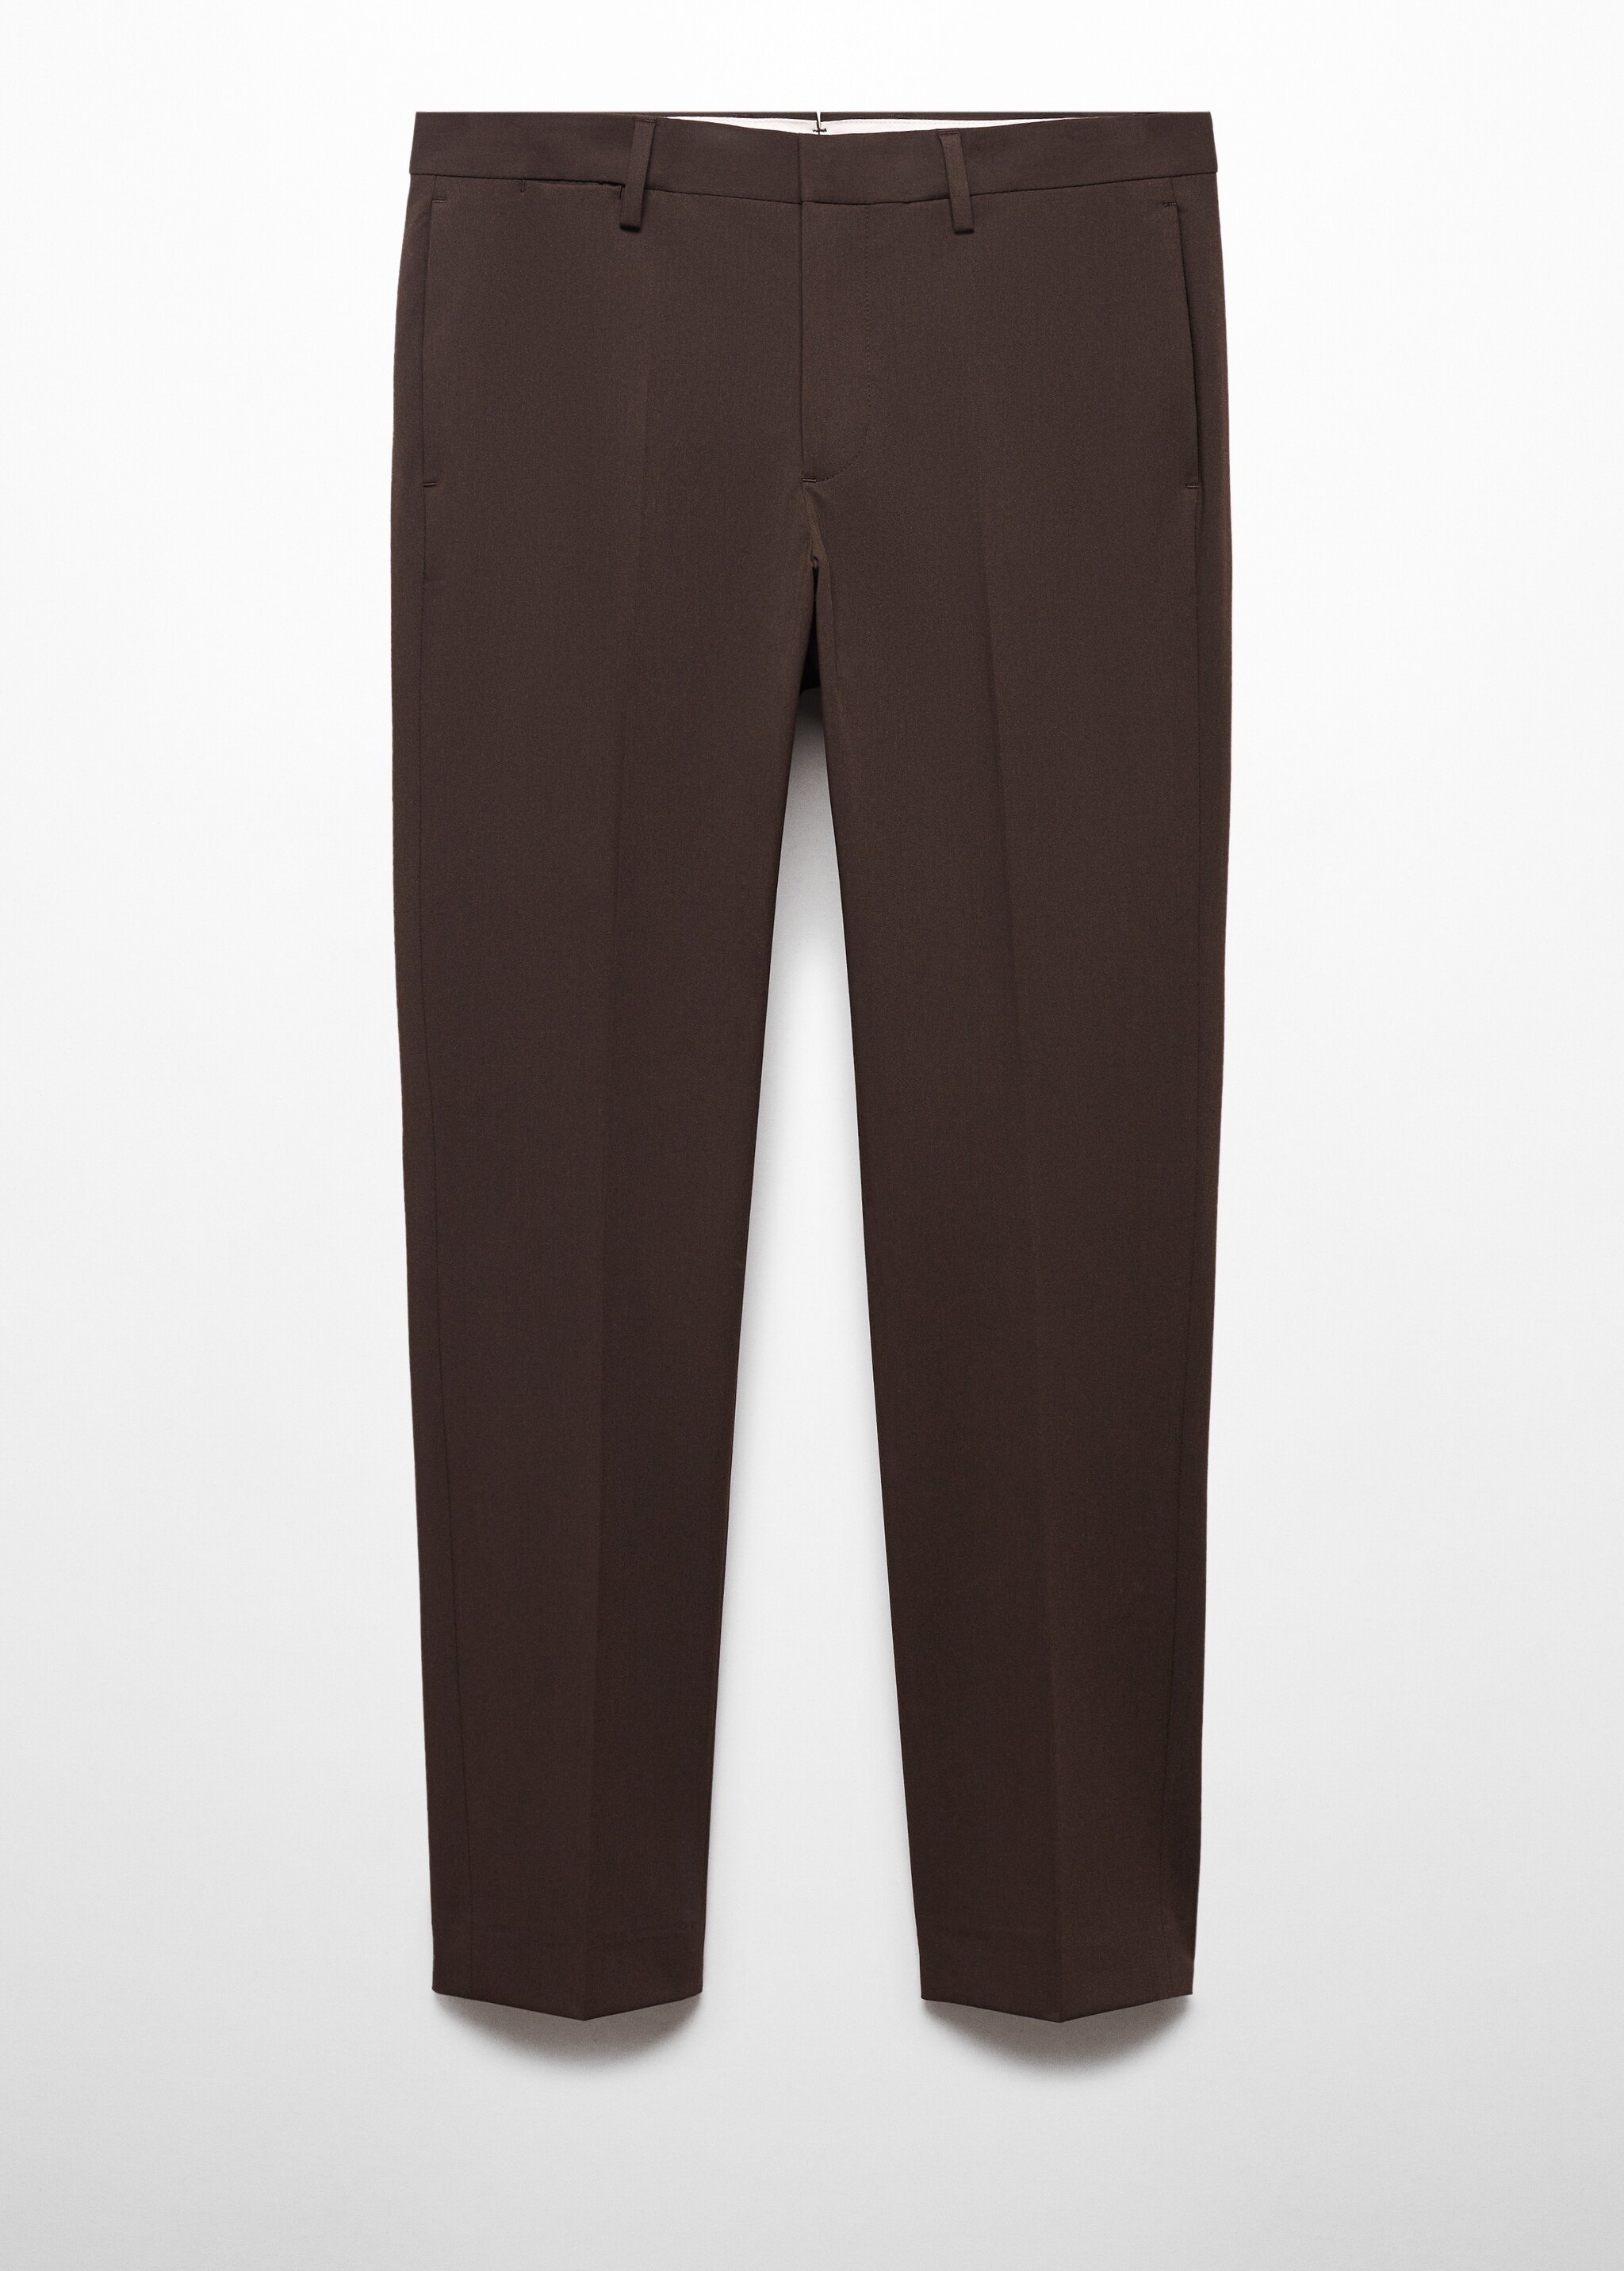 Stretch fabric super slim-fit suit pants - Article without model